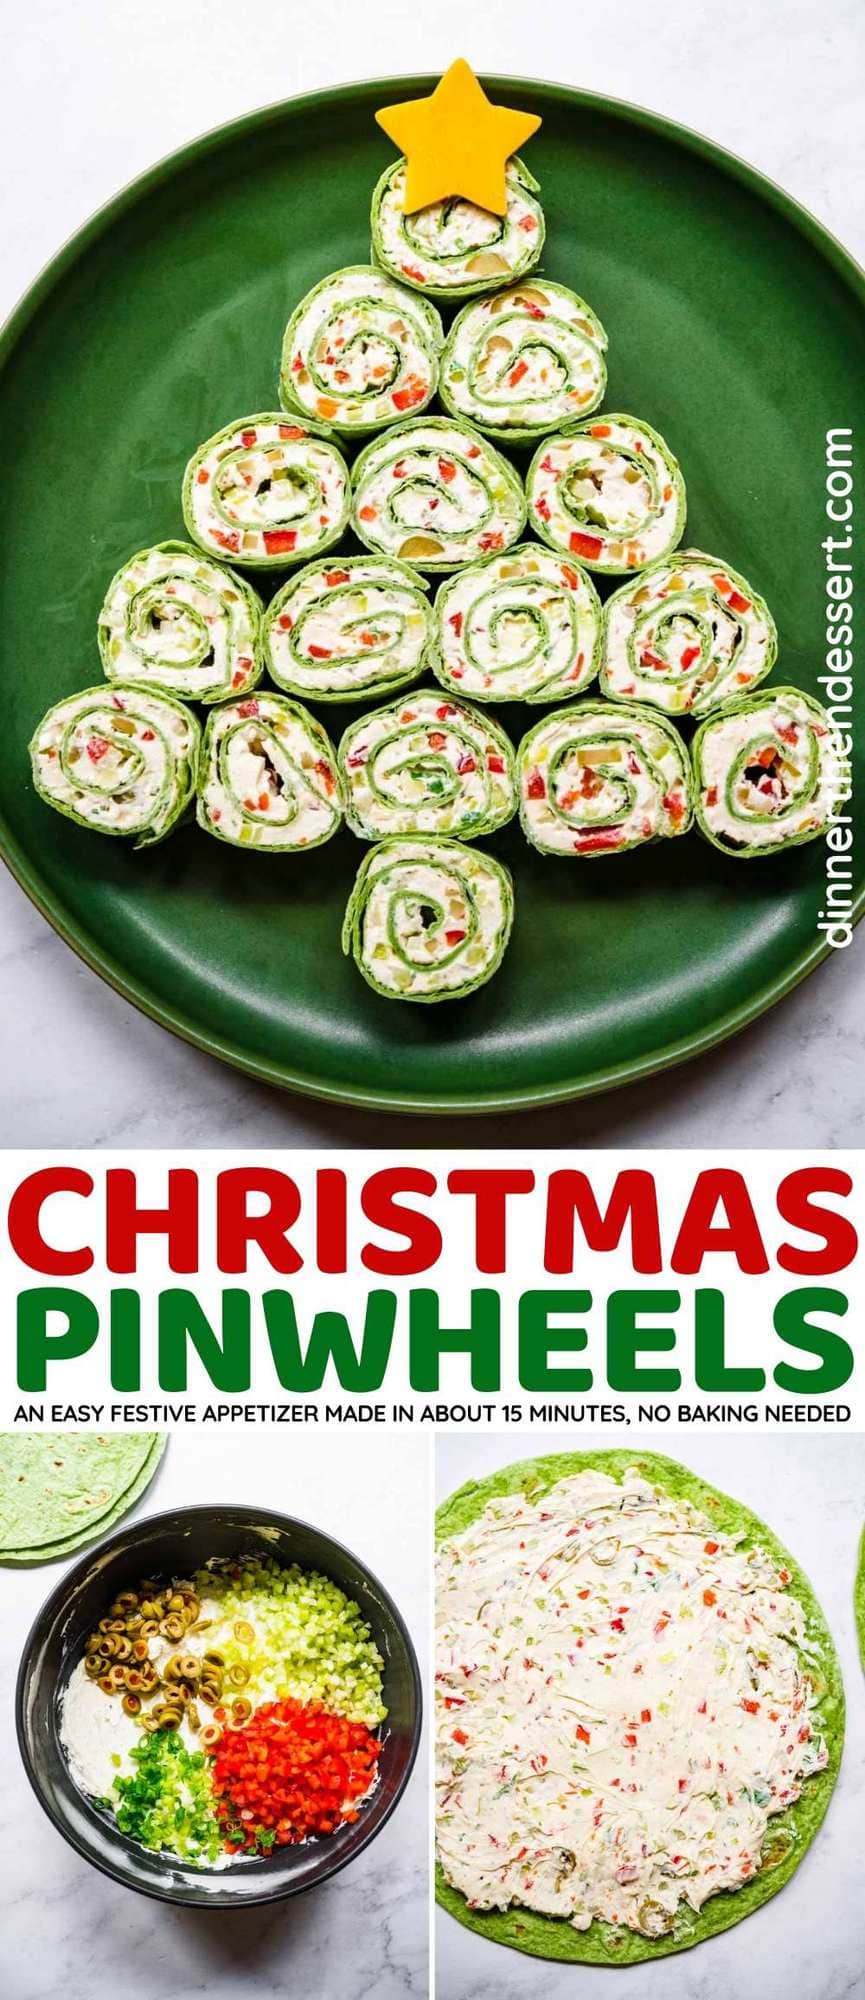 Christmas Pinwheels collage